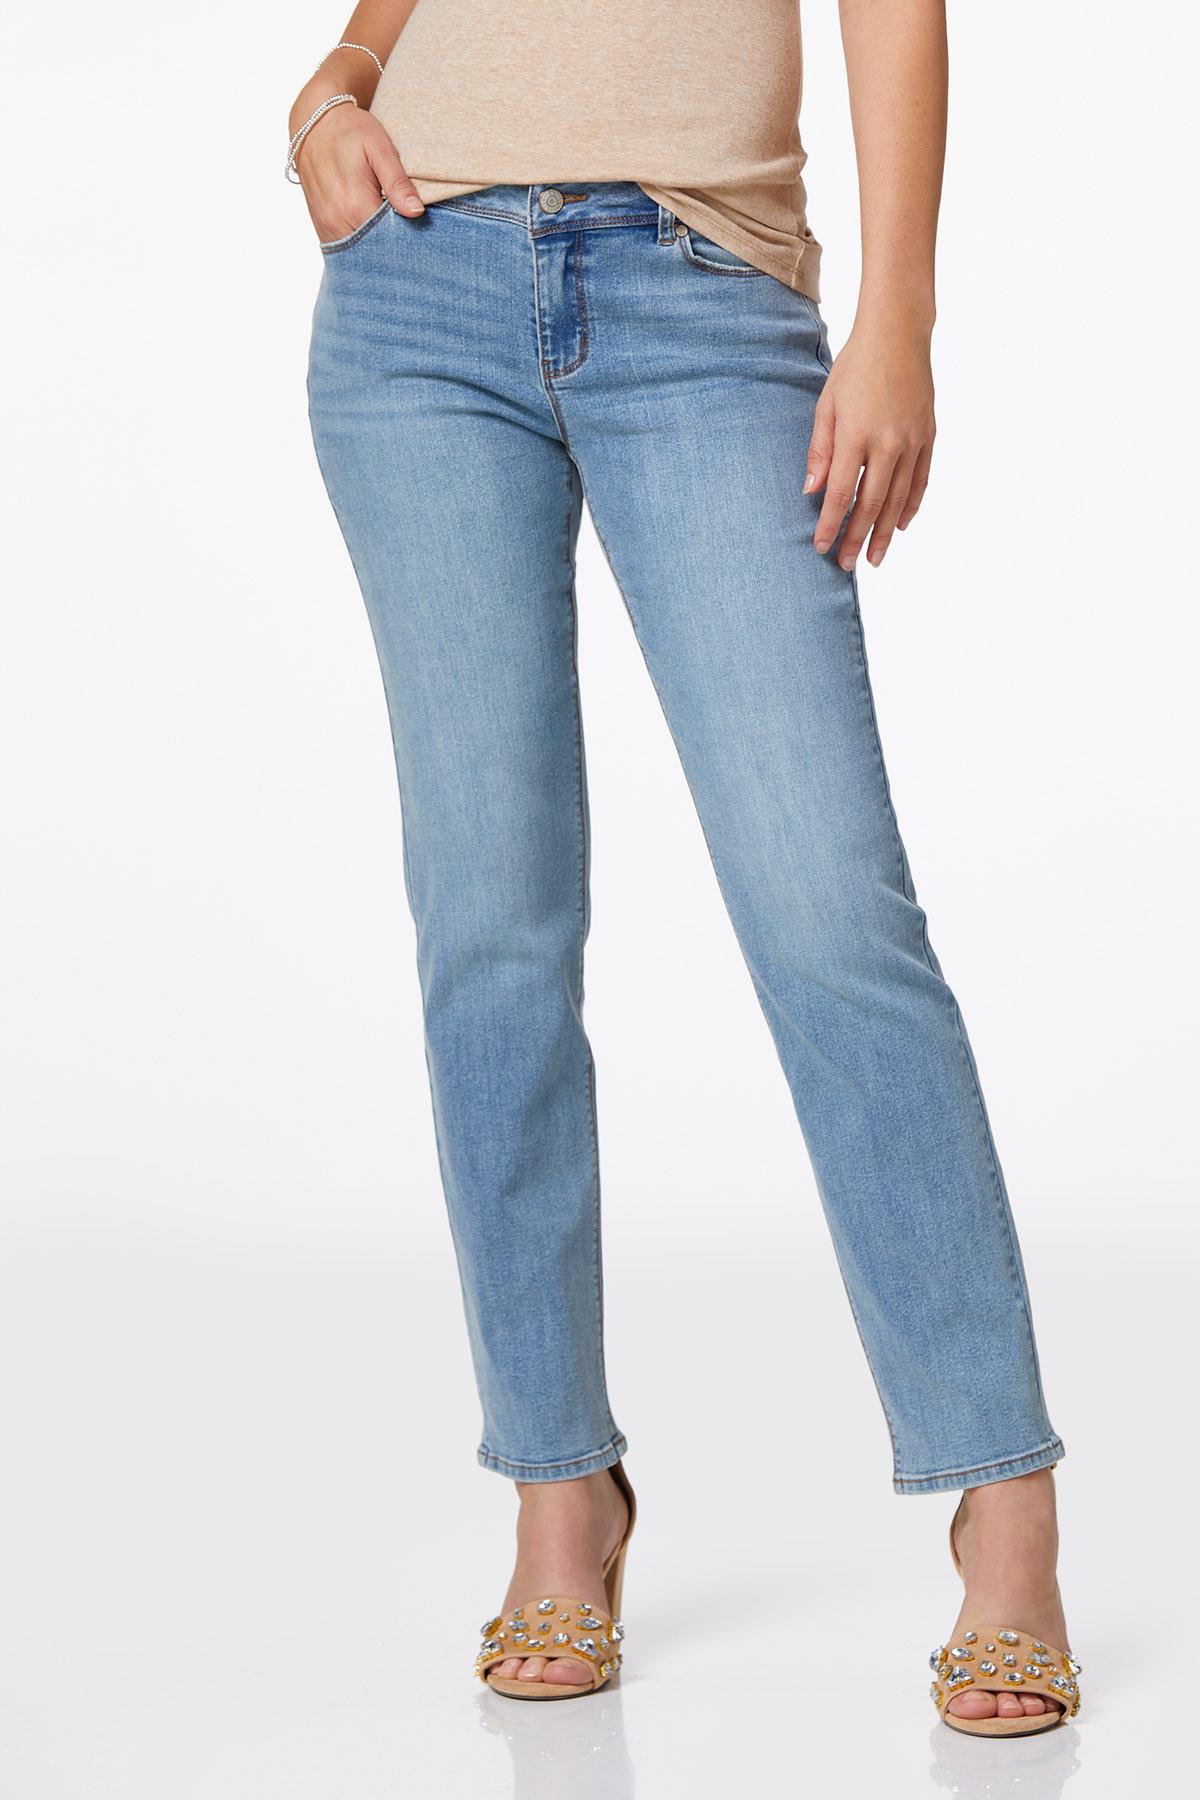 Cato Fashions  Cato Petite Mid Rise Straight Jeans